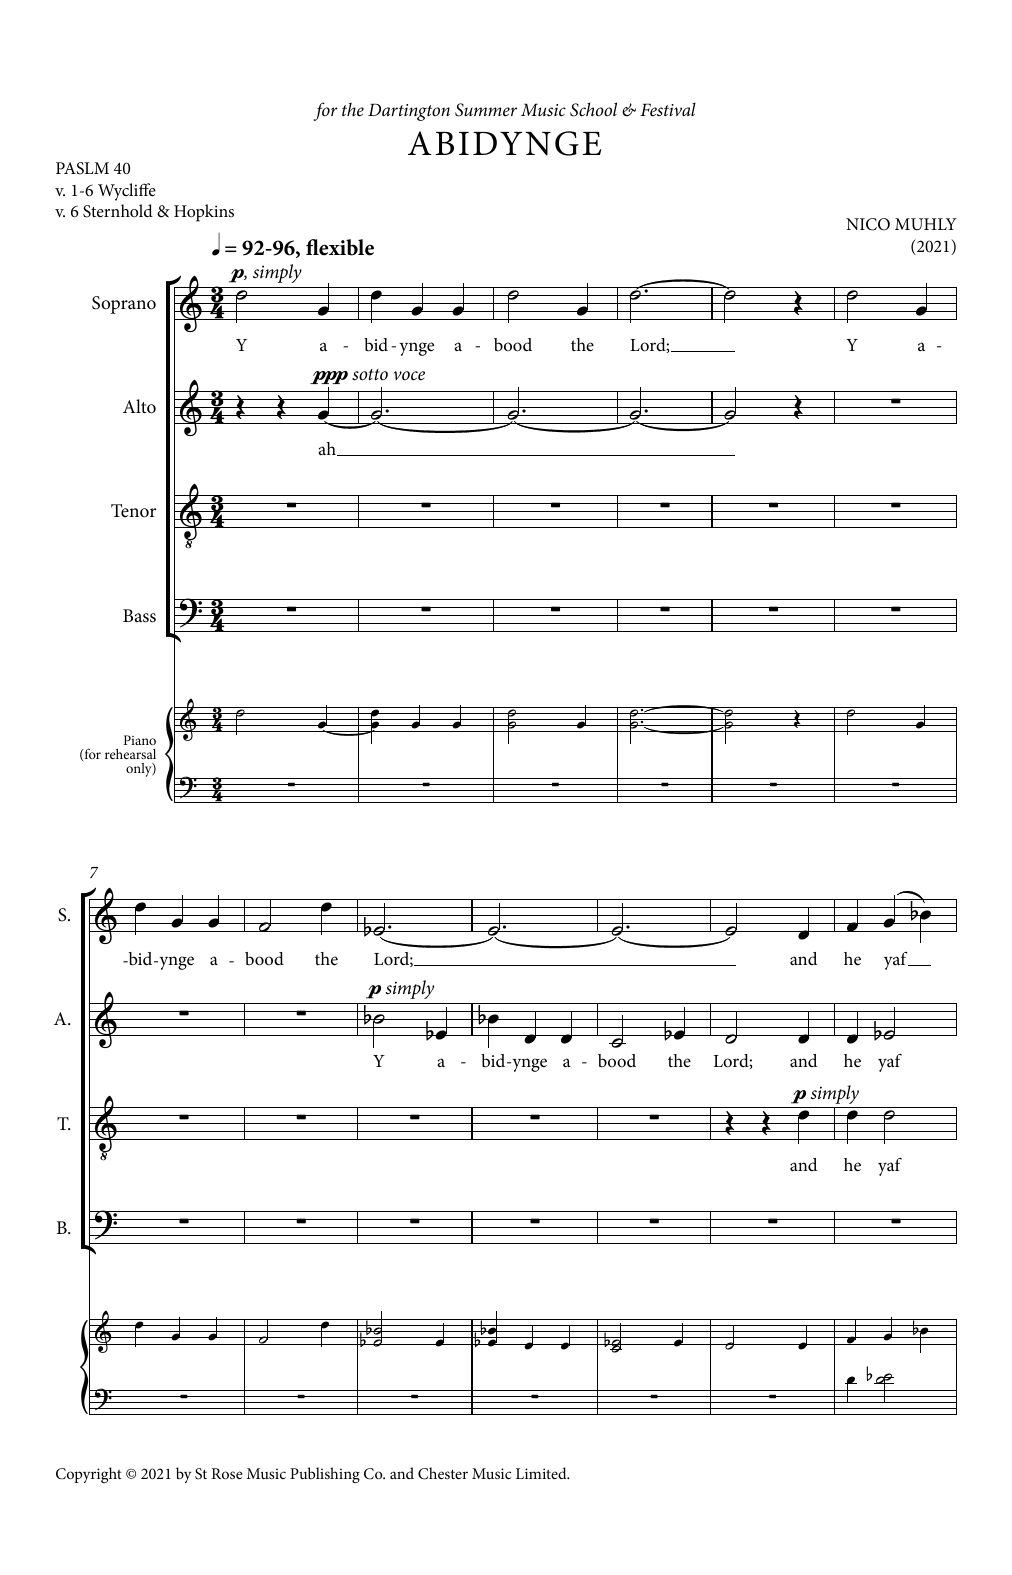 Nico Muhly Abidynge Sheet Music Notes & Chords for SATB Choir - Download or Print PDF